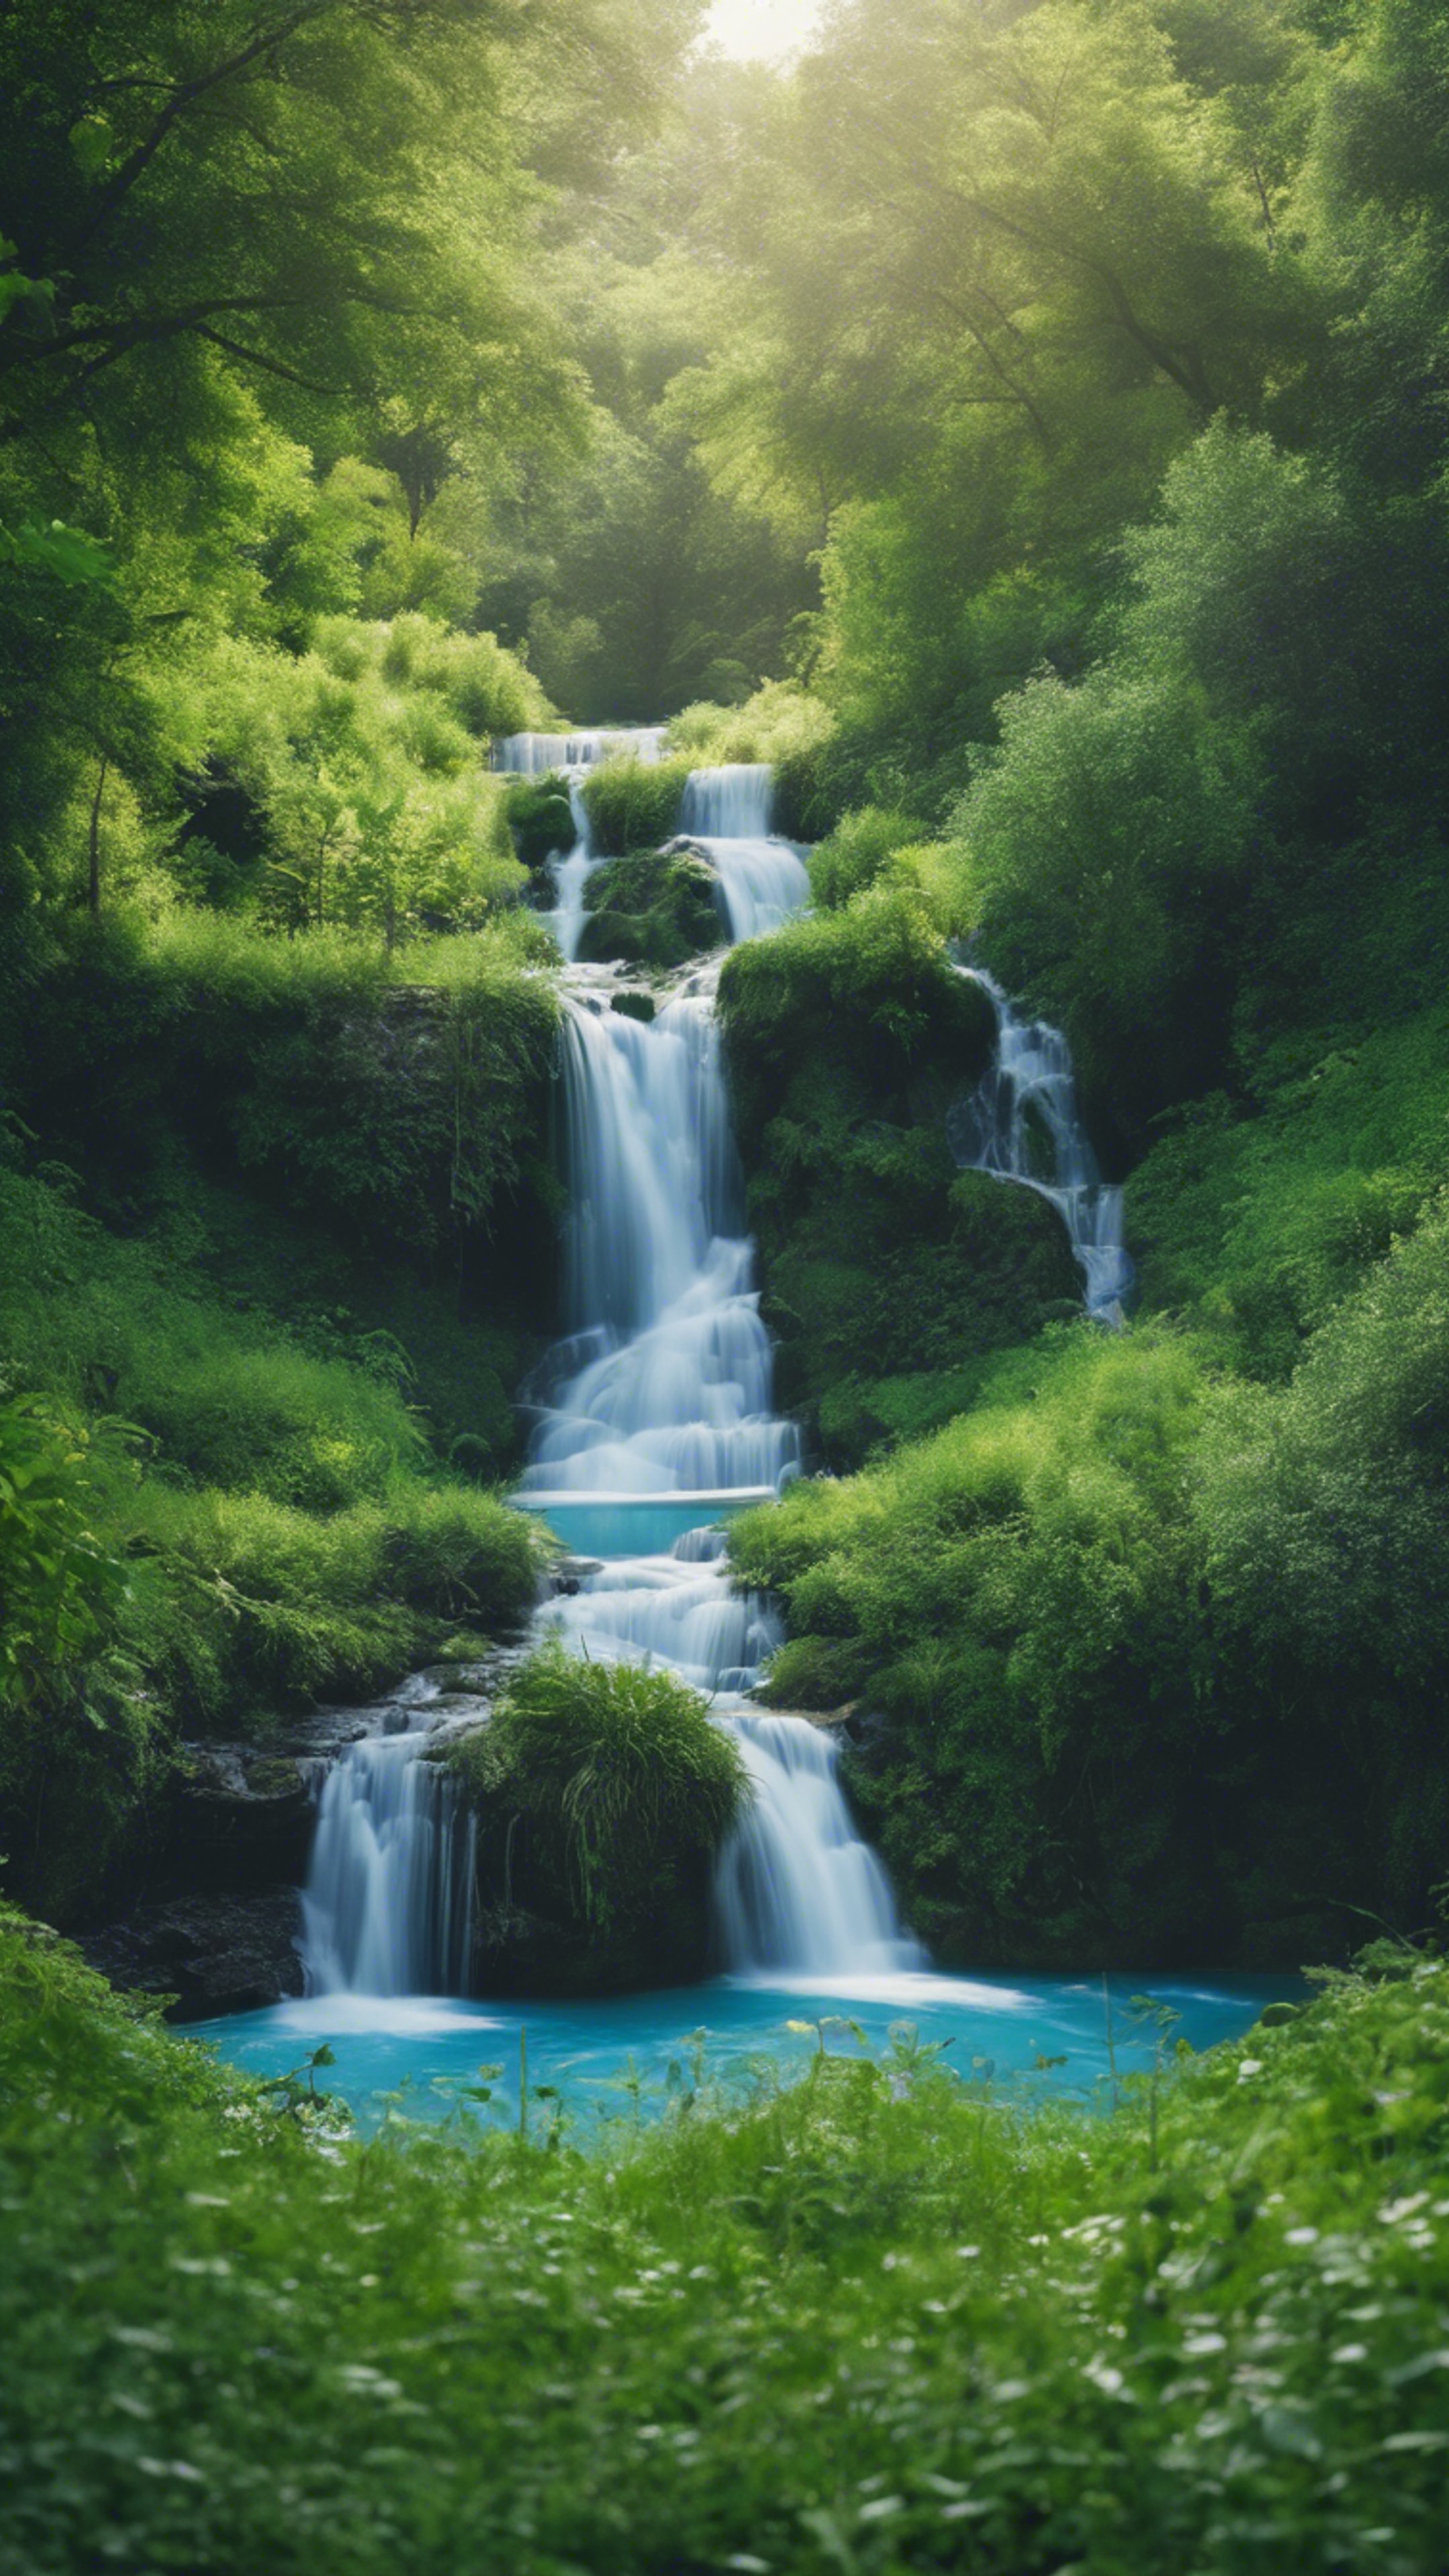 A cool blue waterfall cascading into a lush green meadow. Tapet[661f80b9c31c460db5eb]